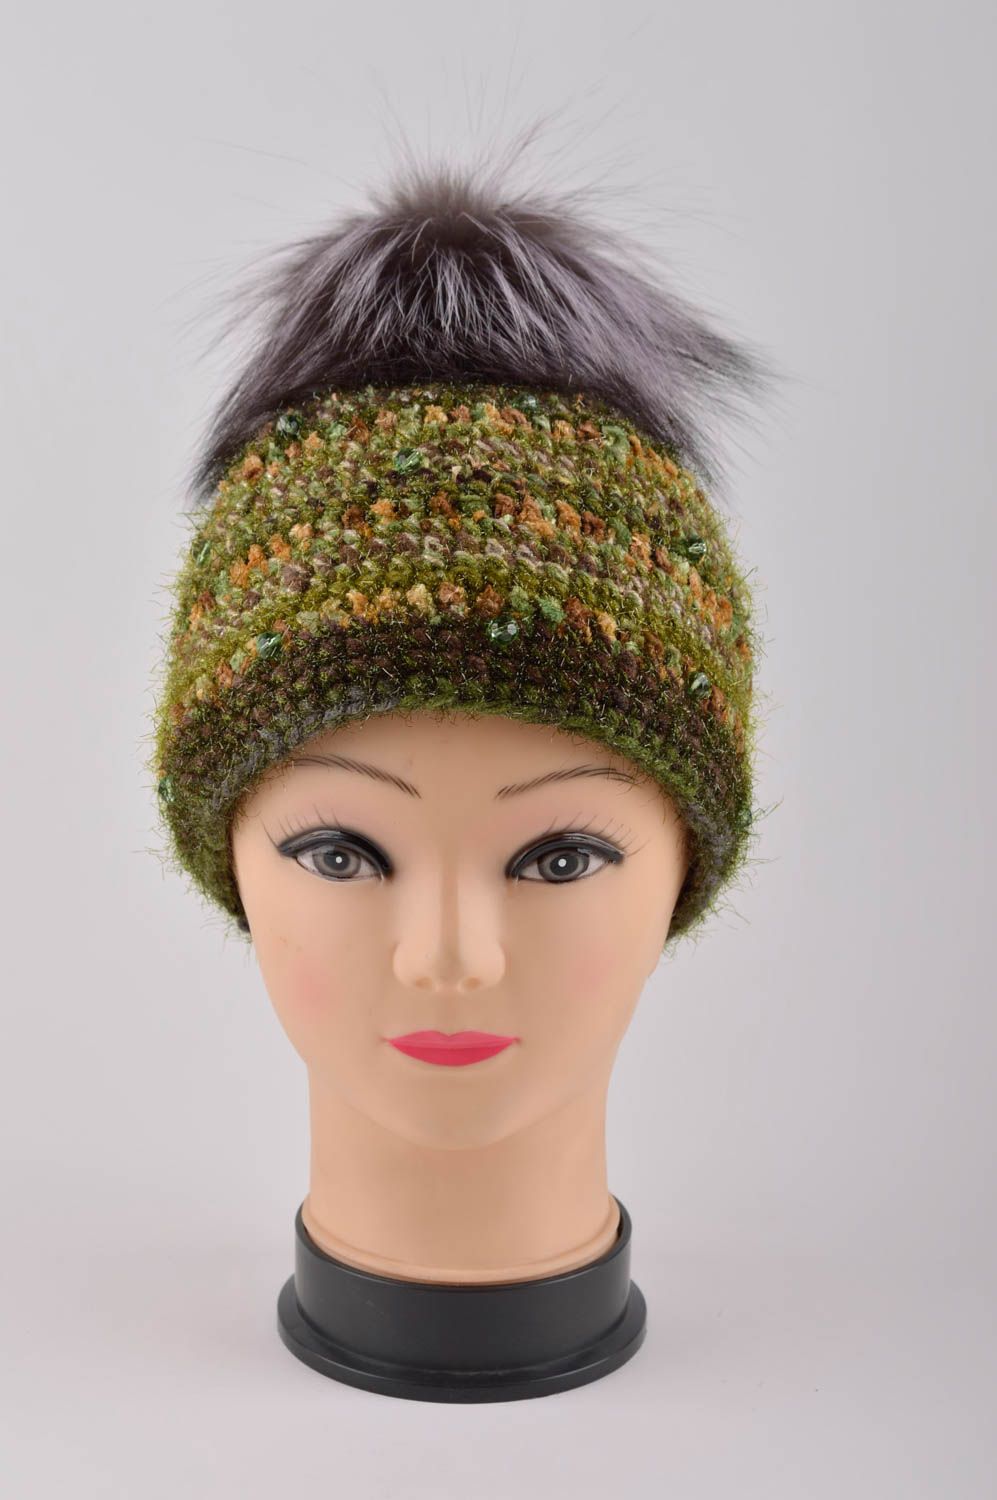 Handmade winter hat crochet hat womens hat designer accessories gifts for girls photo 3